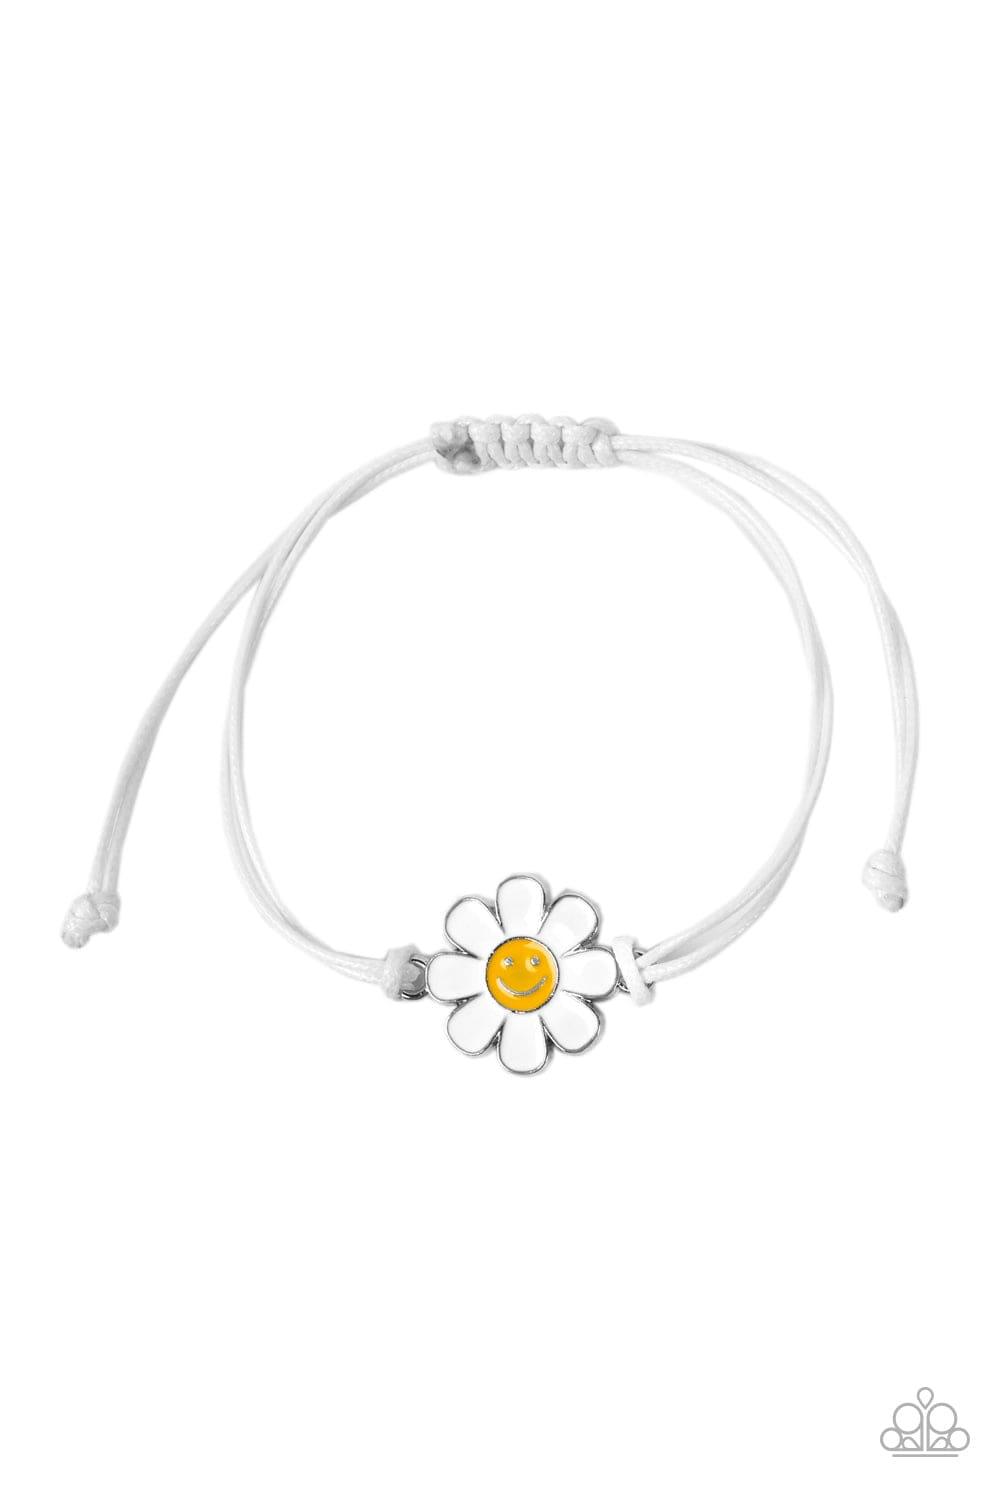 Paparazzi Accessories - Daisy Little Thing - White Urban Bracelet - Bling by JessieK